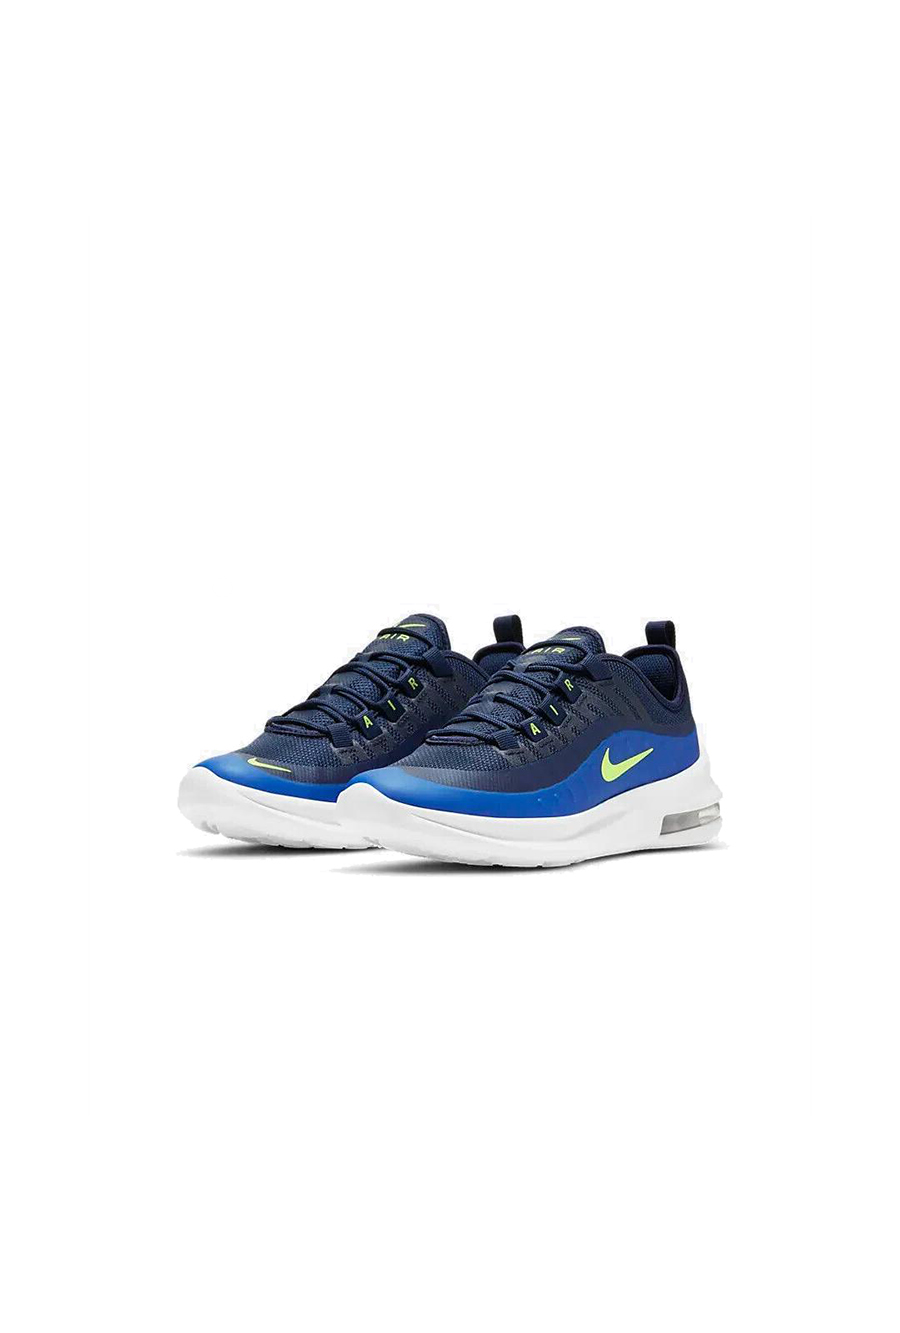 Nike Air Max Axis Midnight Navy Running Shoes - La balance